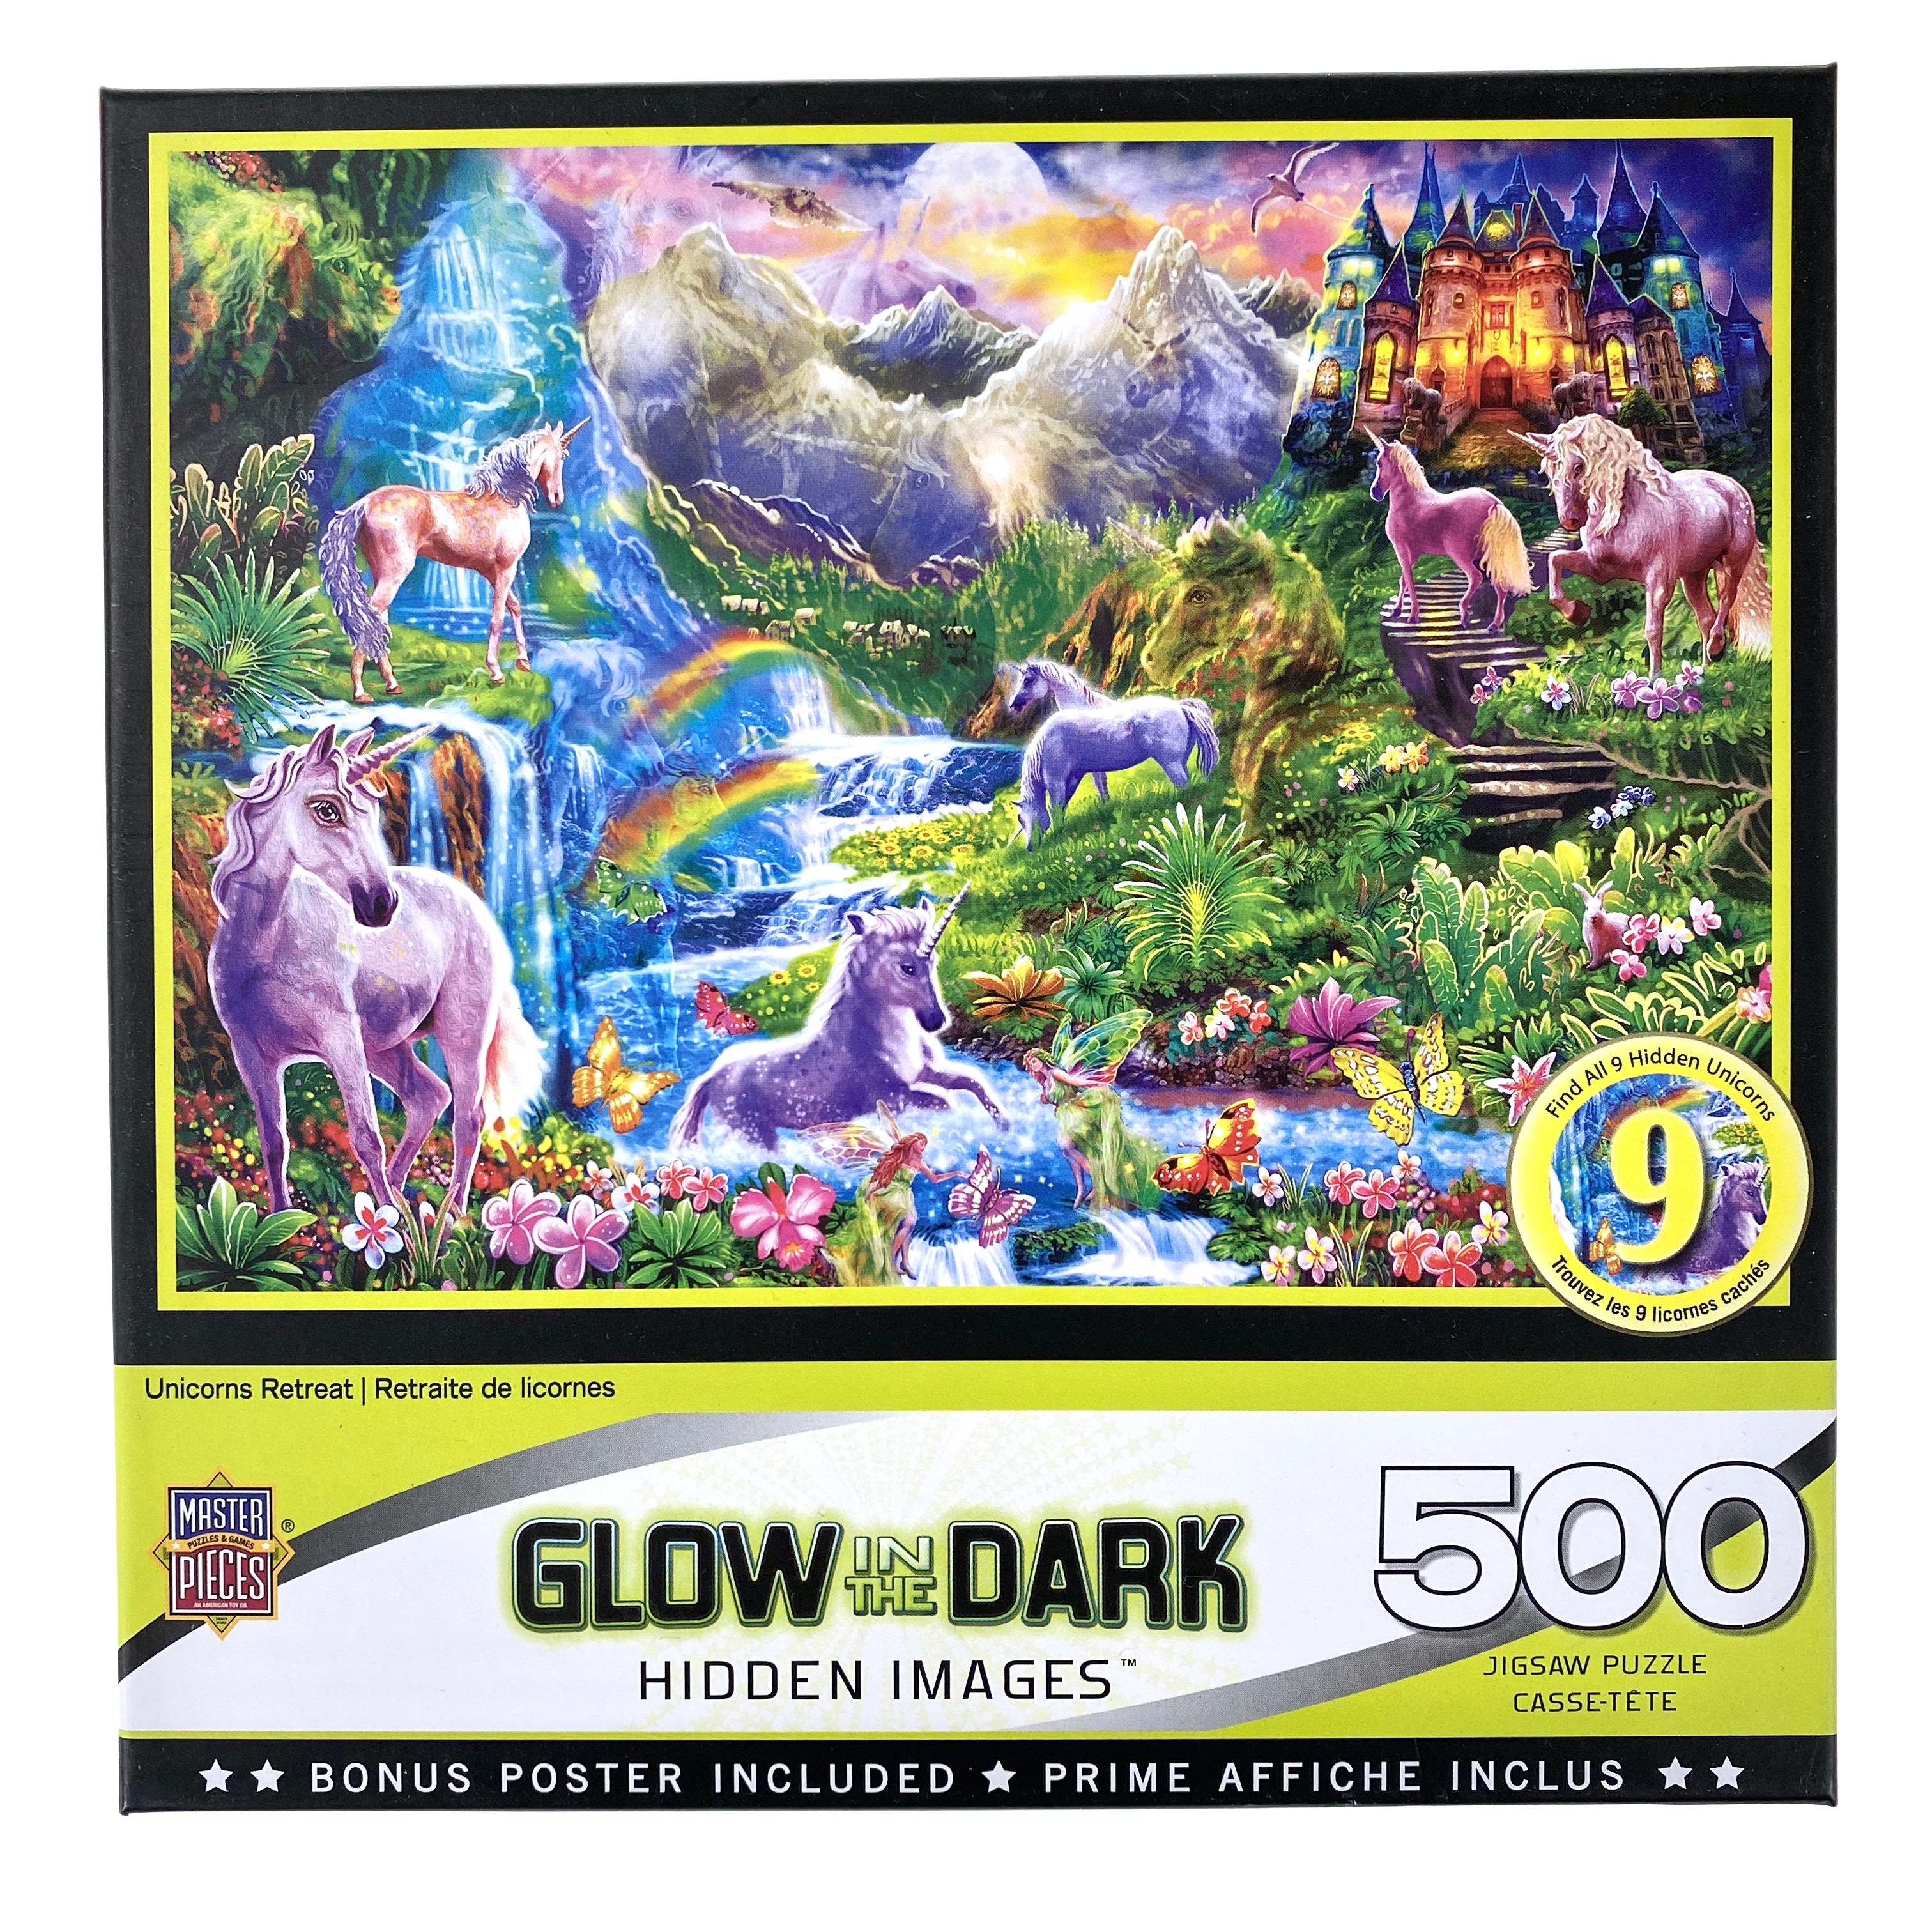 Unicorns Retreat 500 Piece Hidden Image Glow In The Dark Puzzle    